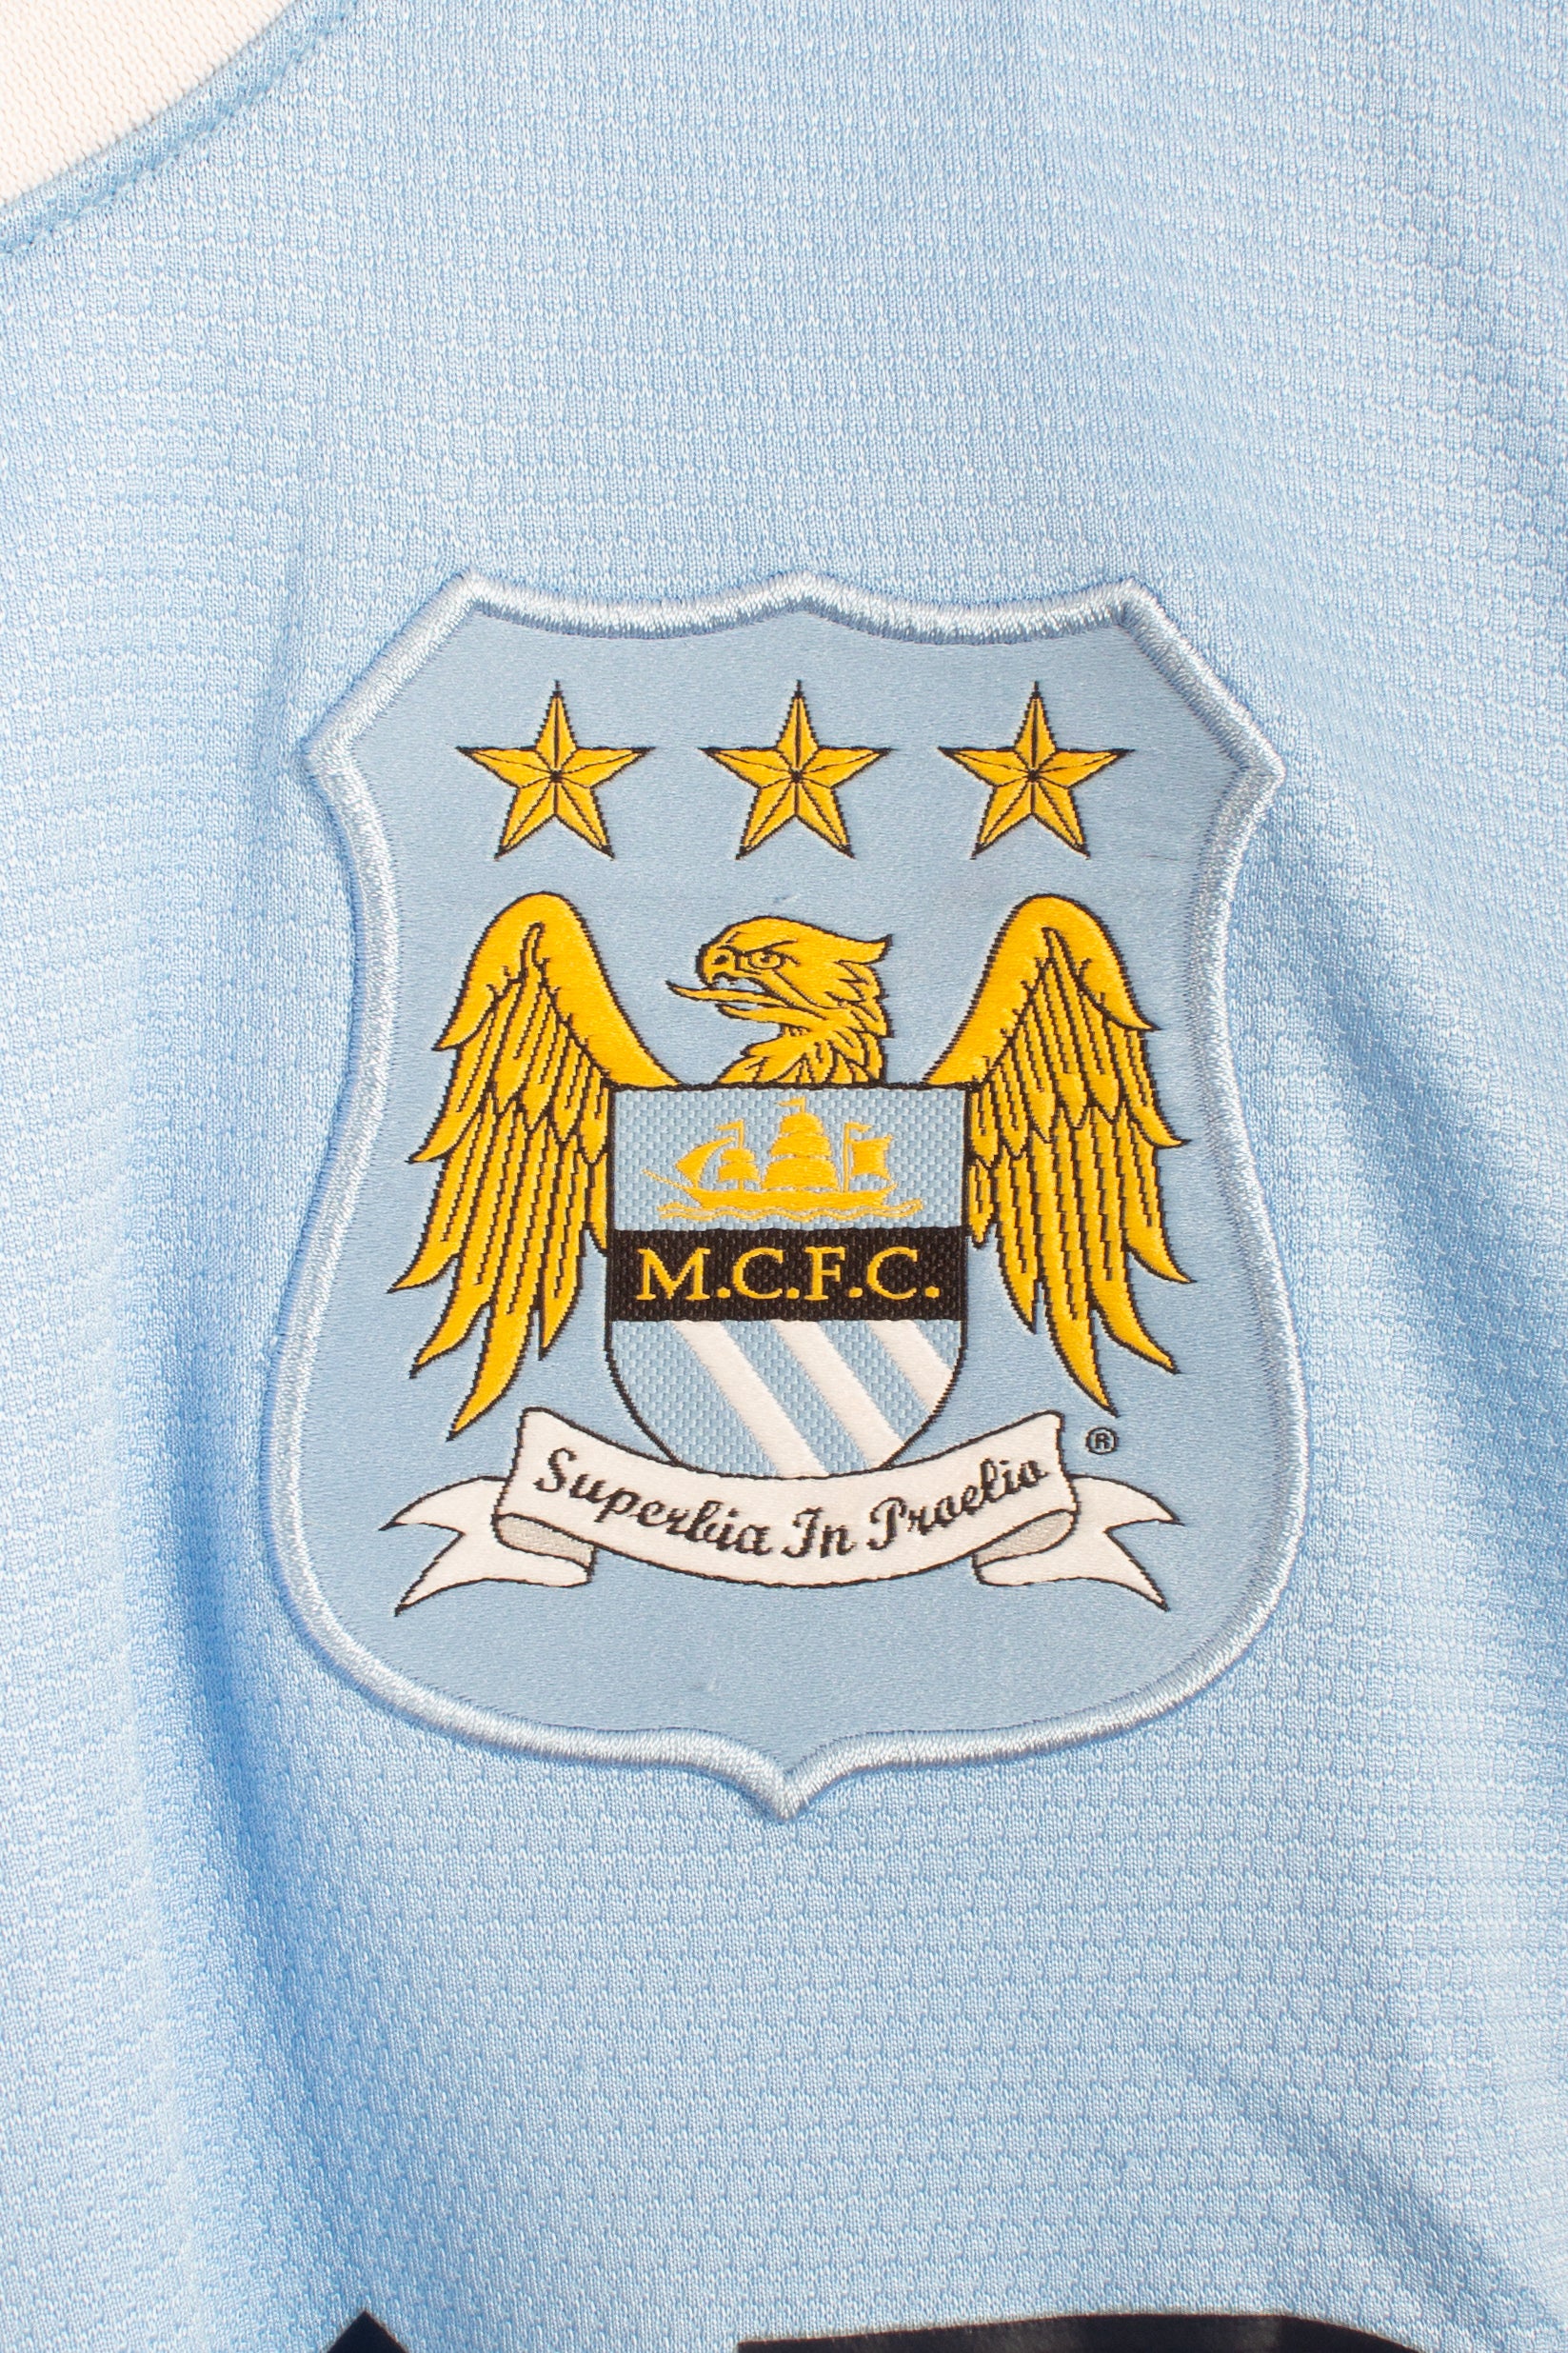 Manchester City 2013/14 Home Shirt (S)